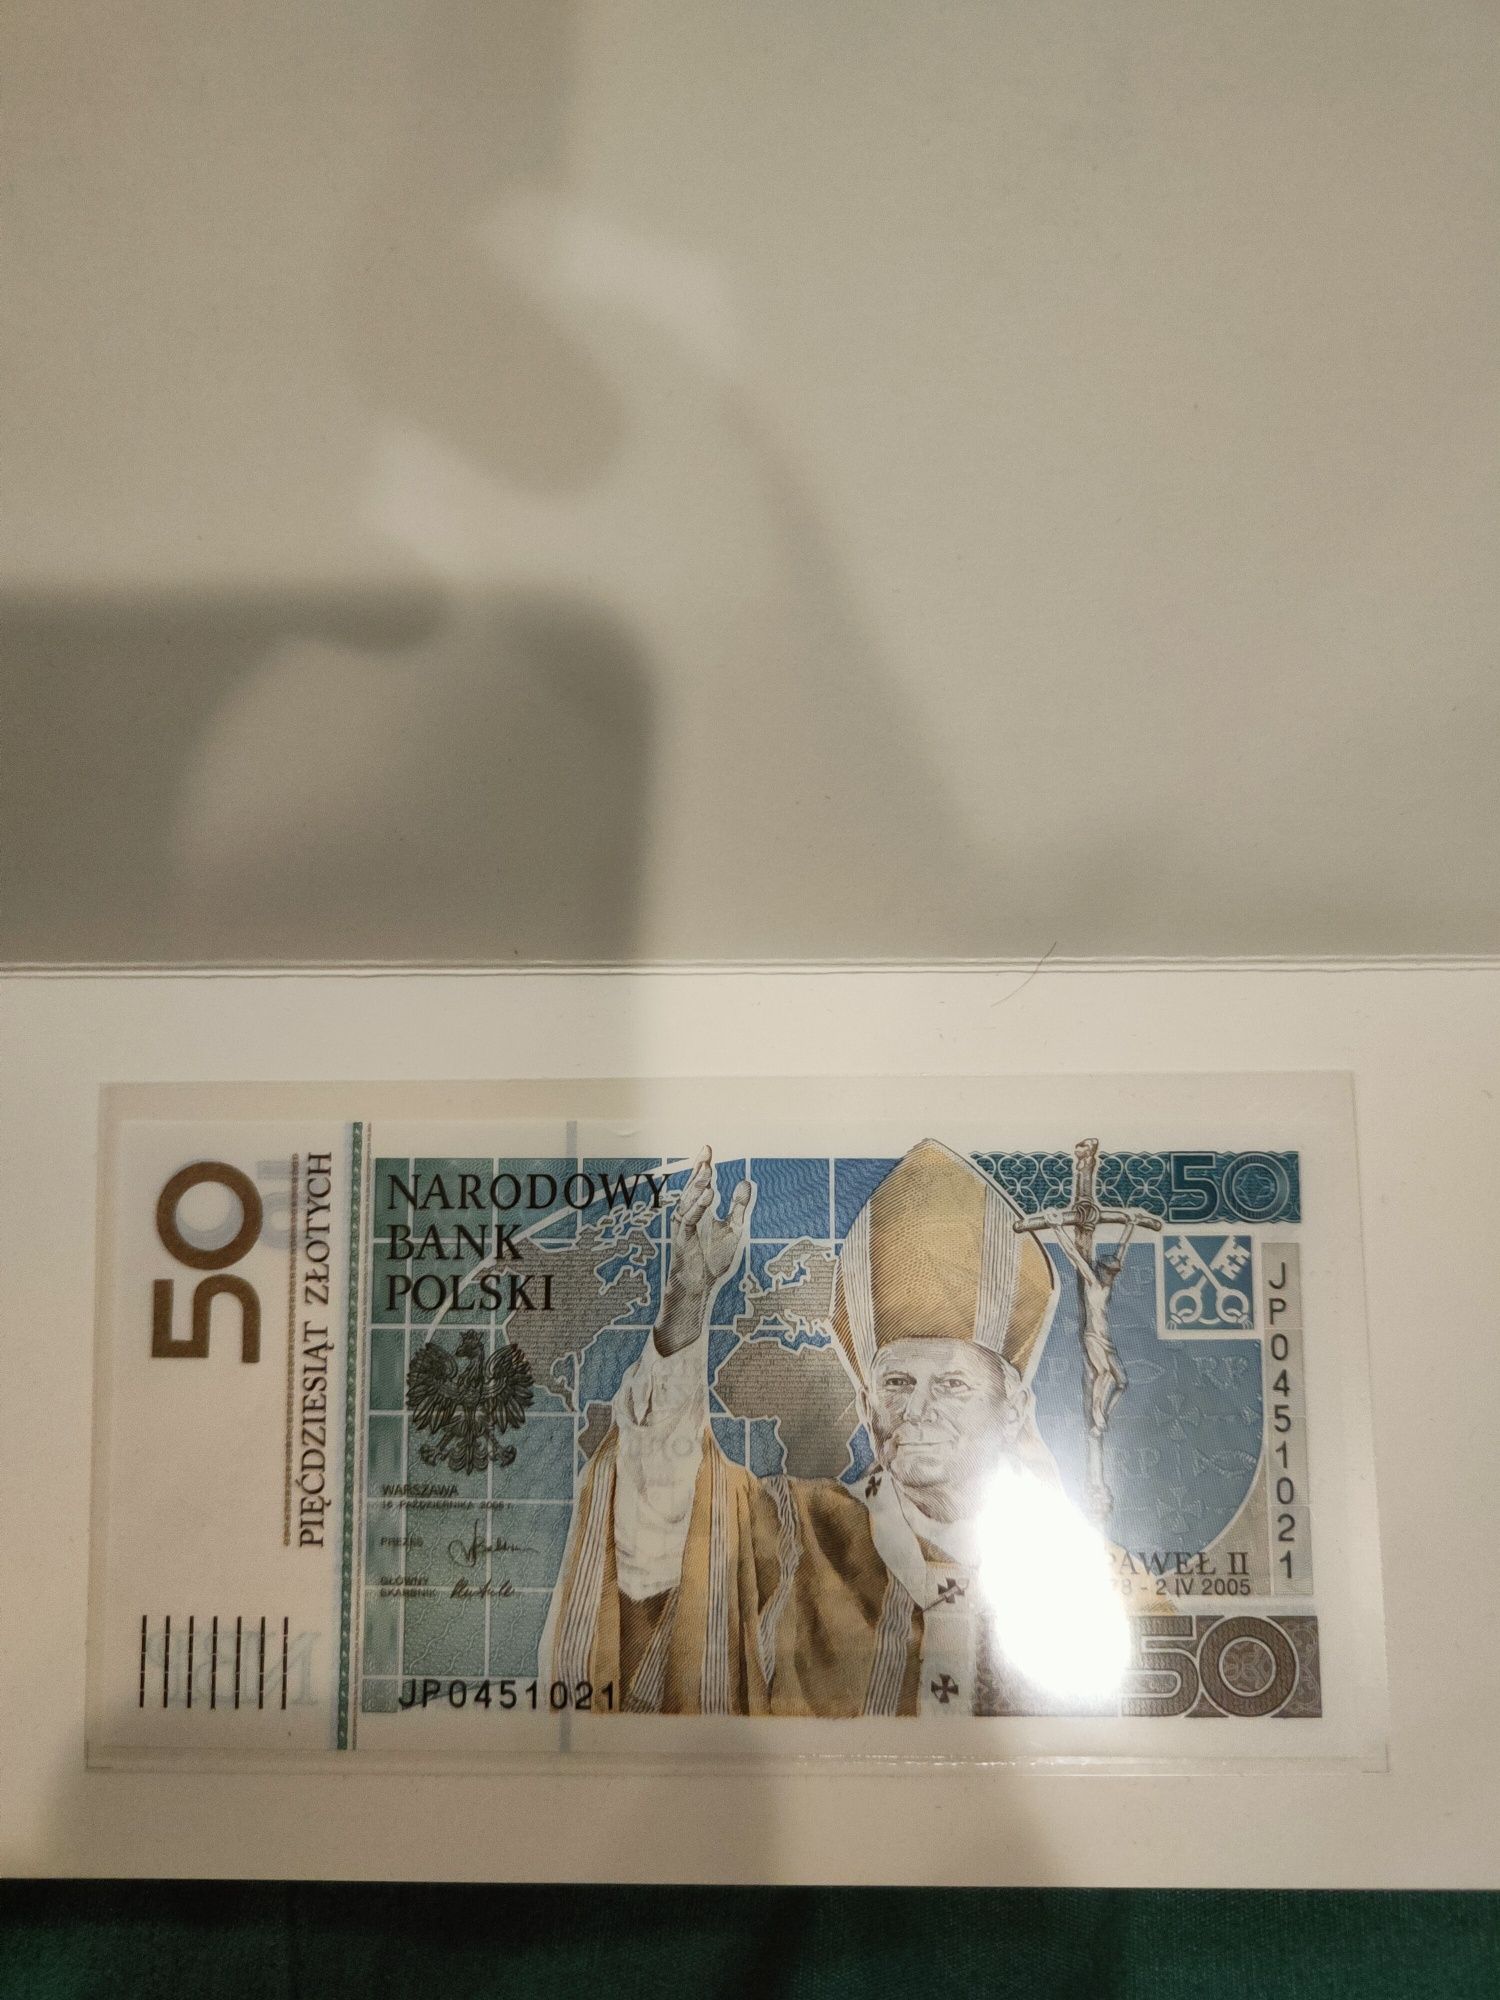 50 zł banknot Jan Paweł II